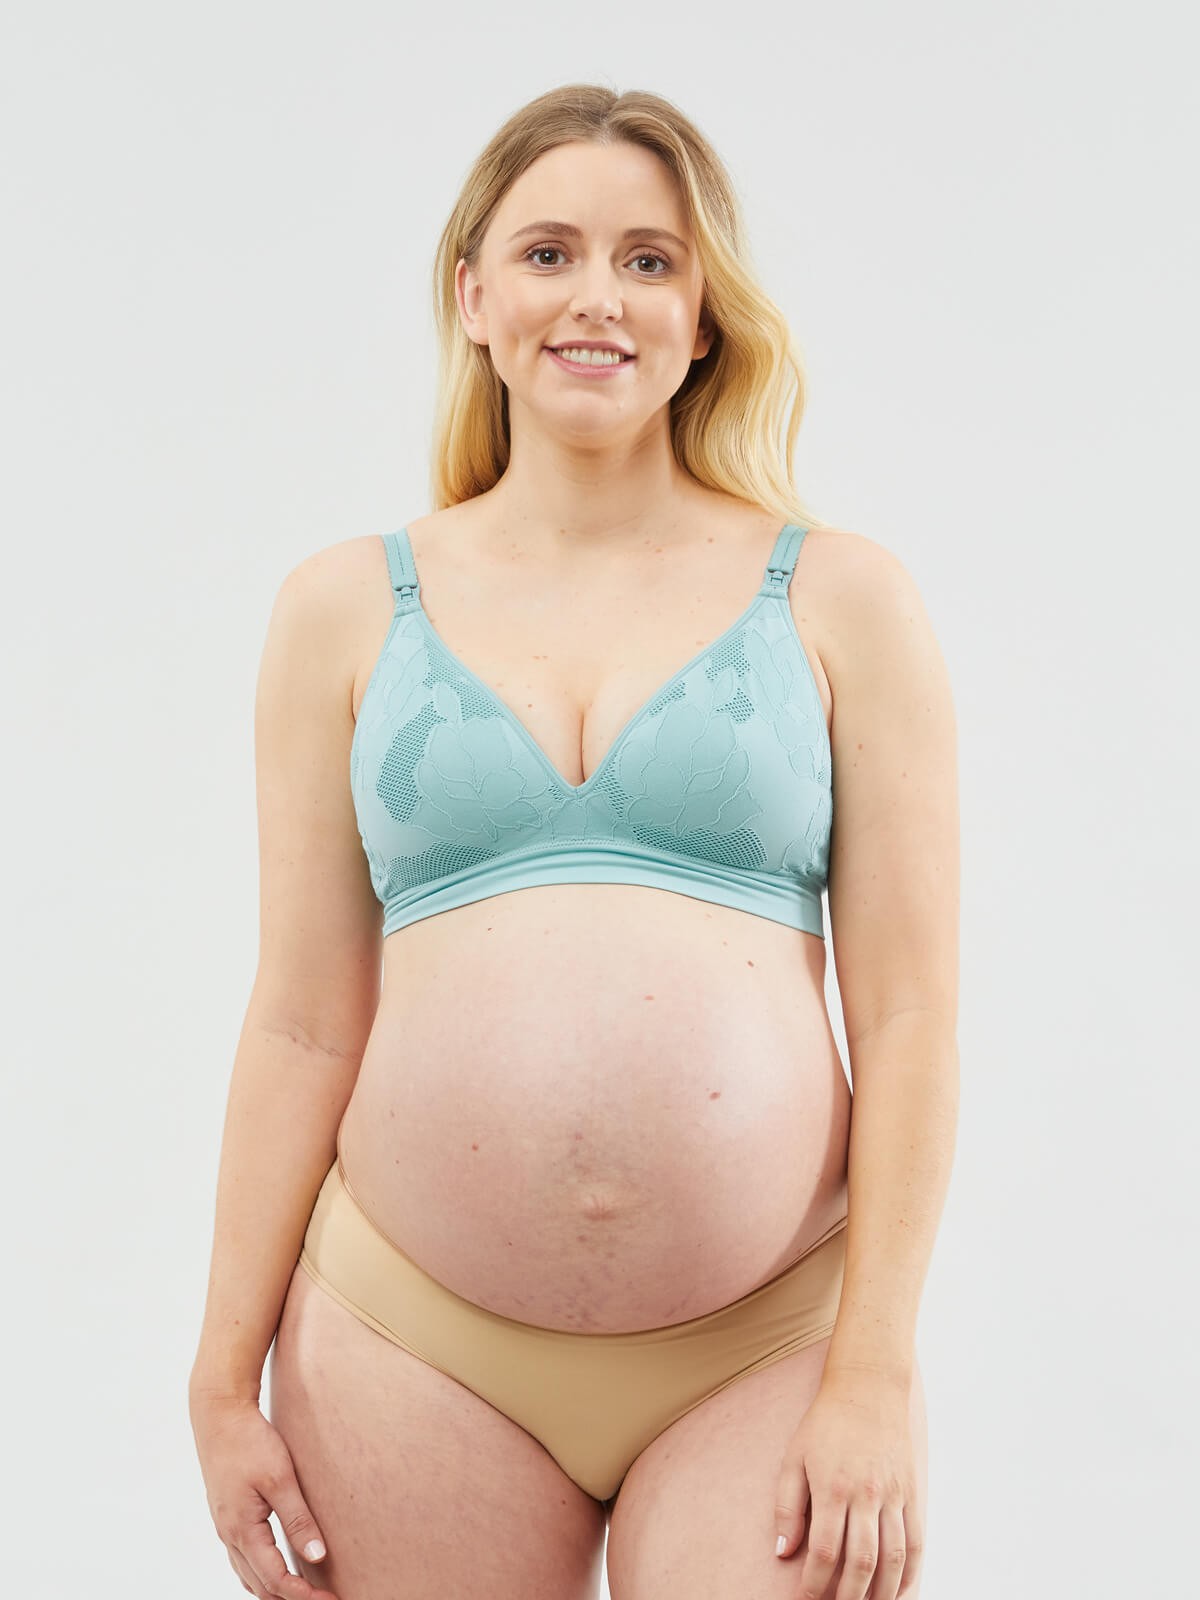 Cake Maternity Truffles Nursing Lace Bra for Breastfeeding, Sexy Maternity  Bra, Dark Brown, 36F UK/ 36G US